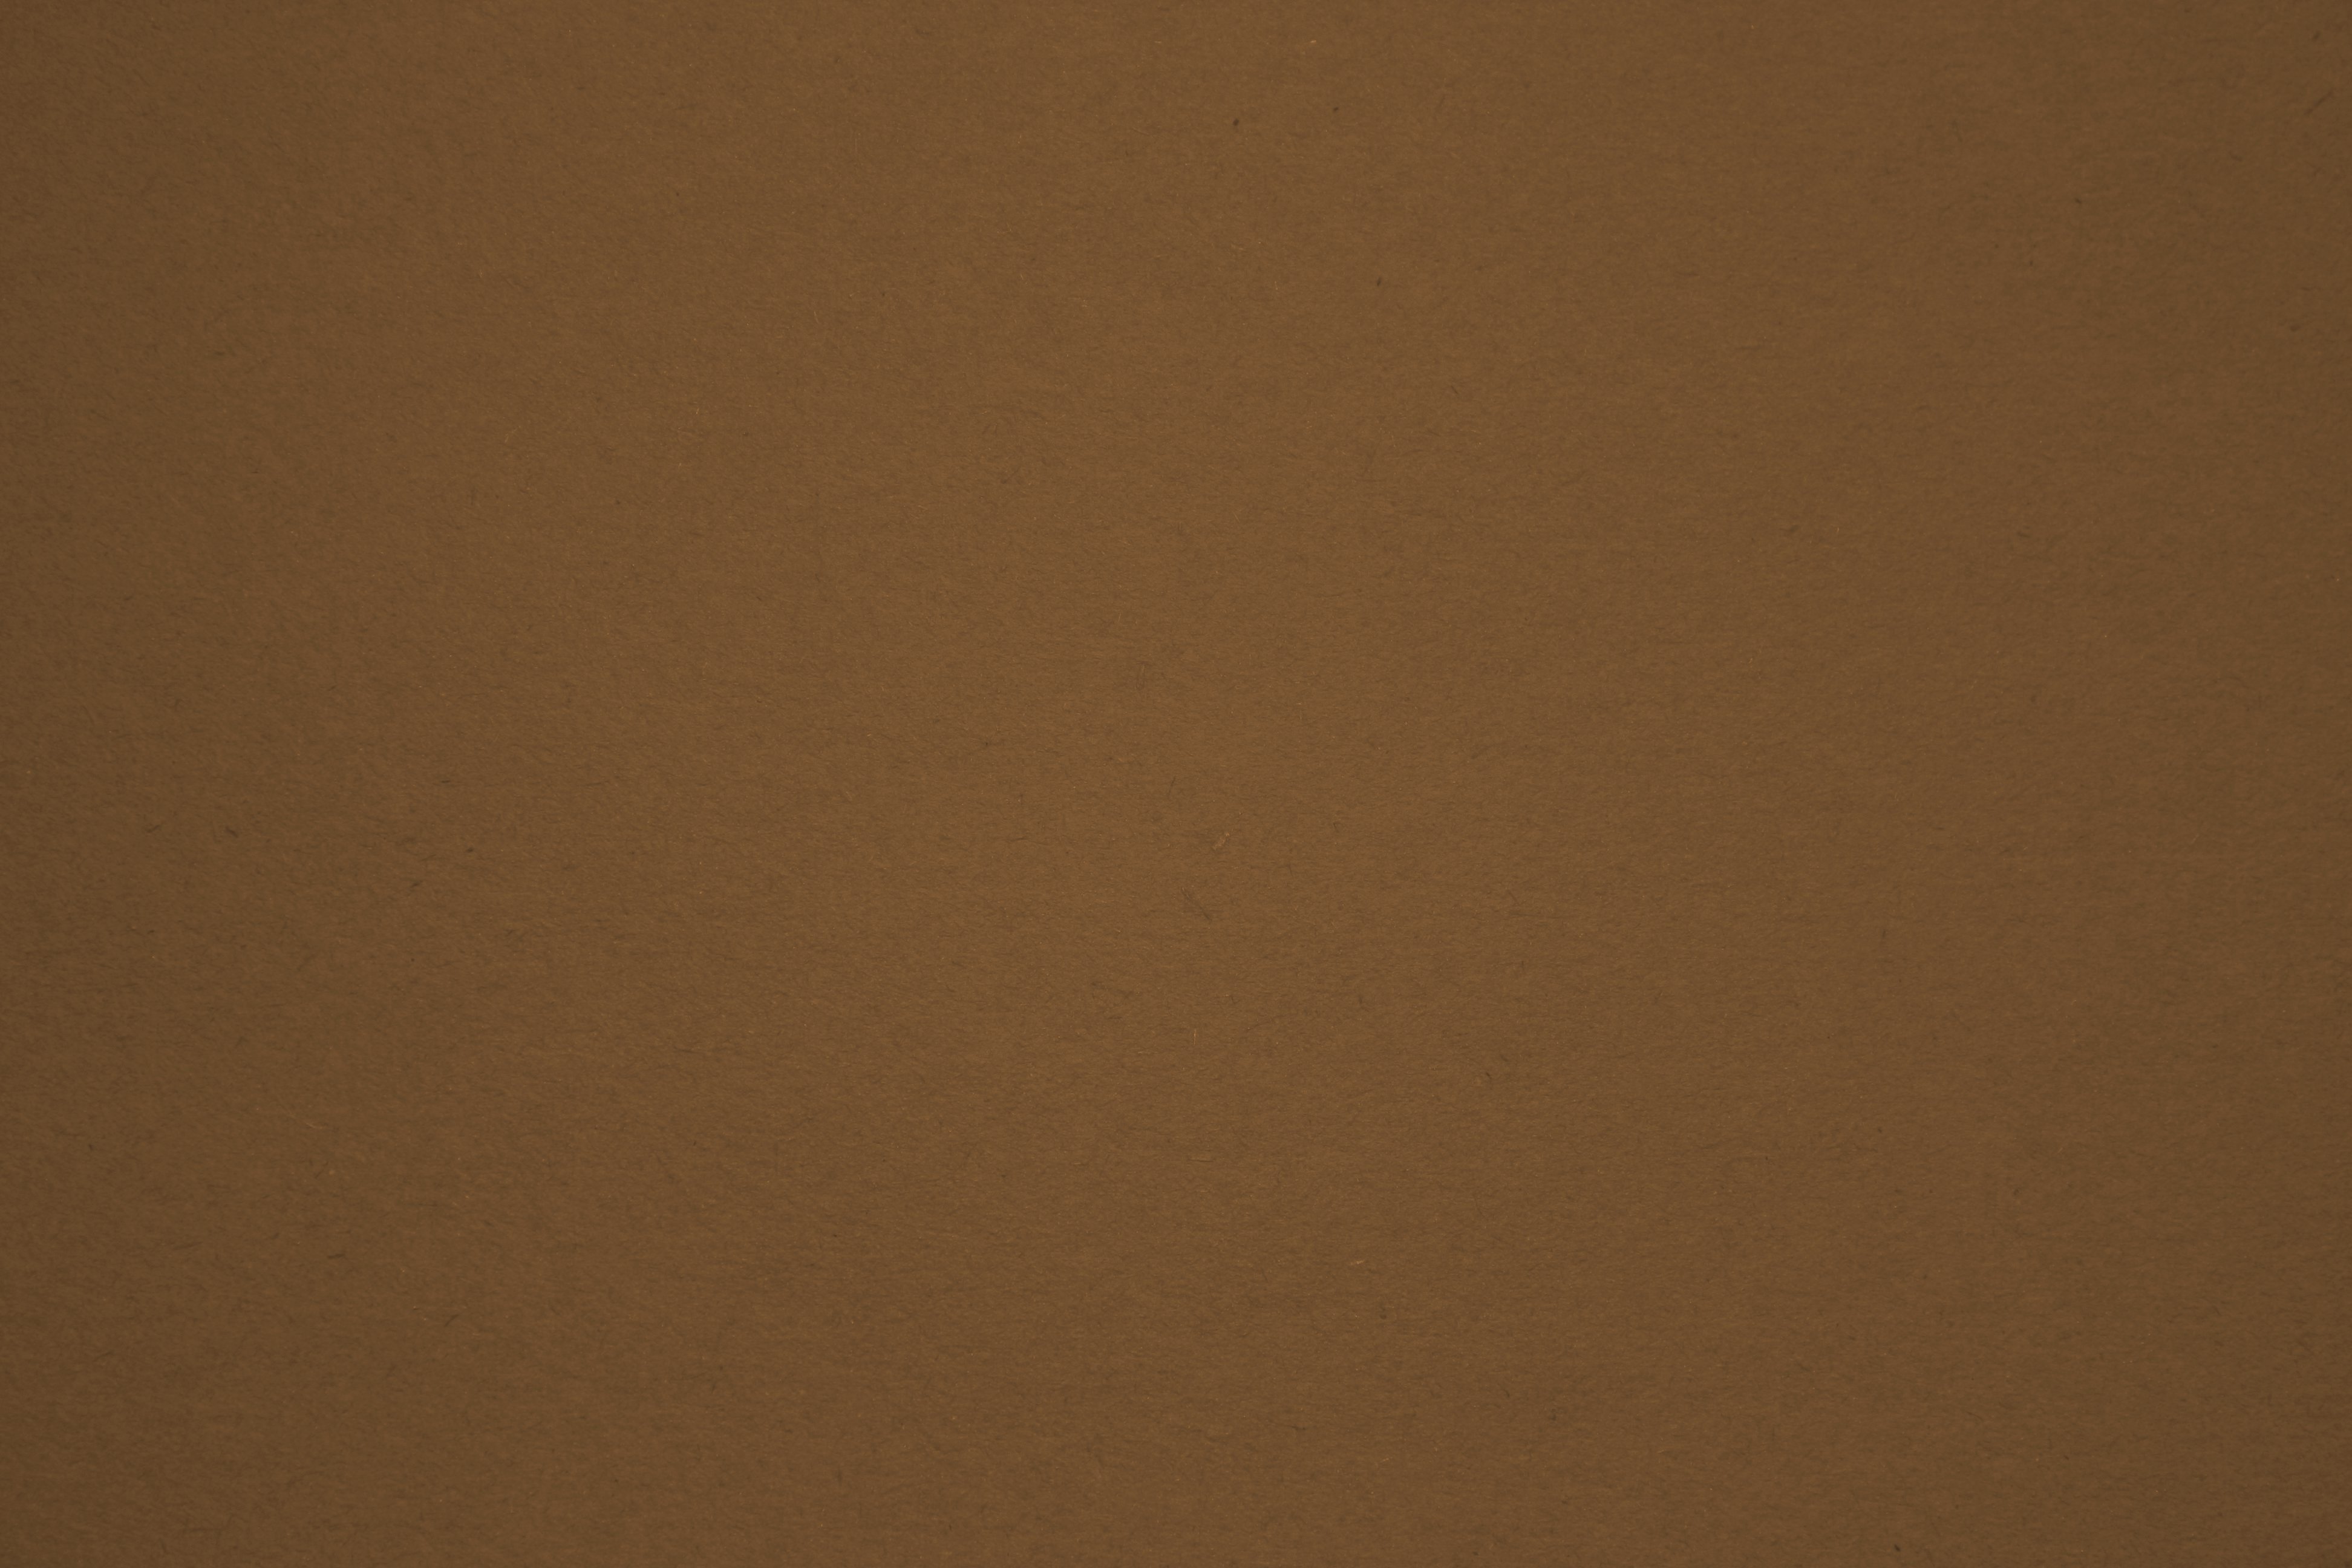 Brown Construction Paper Texture Picture | Free Photograph | Photos